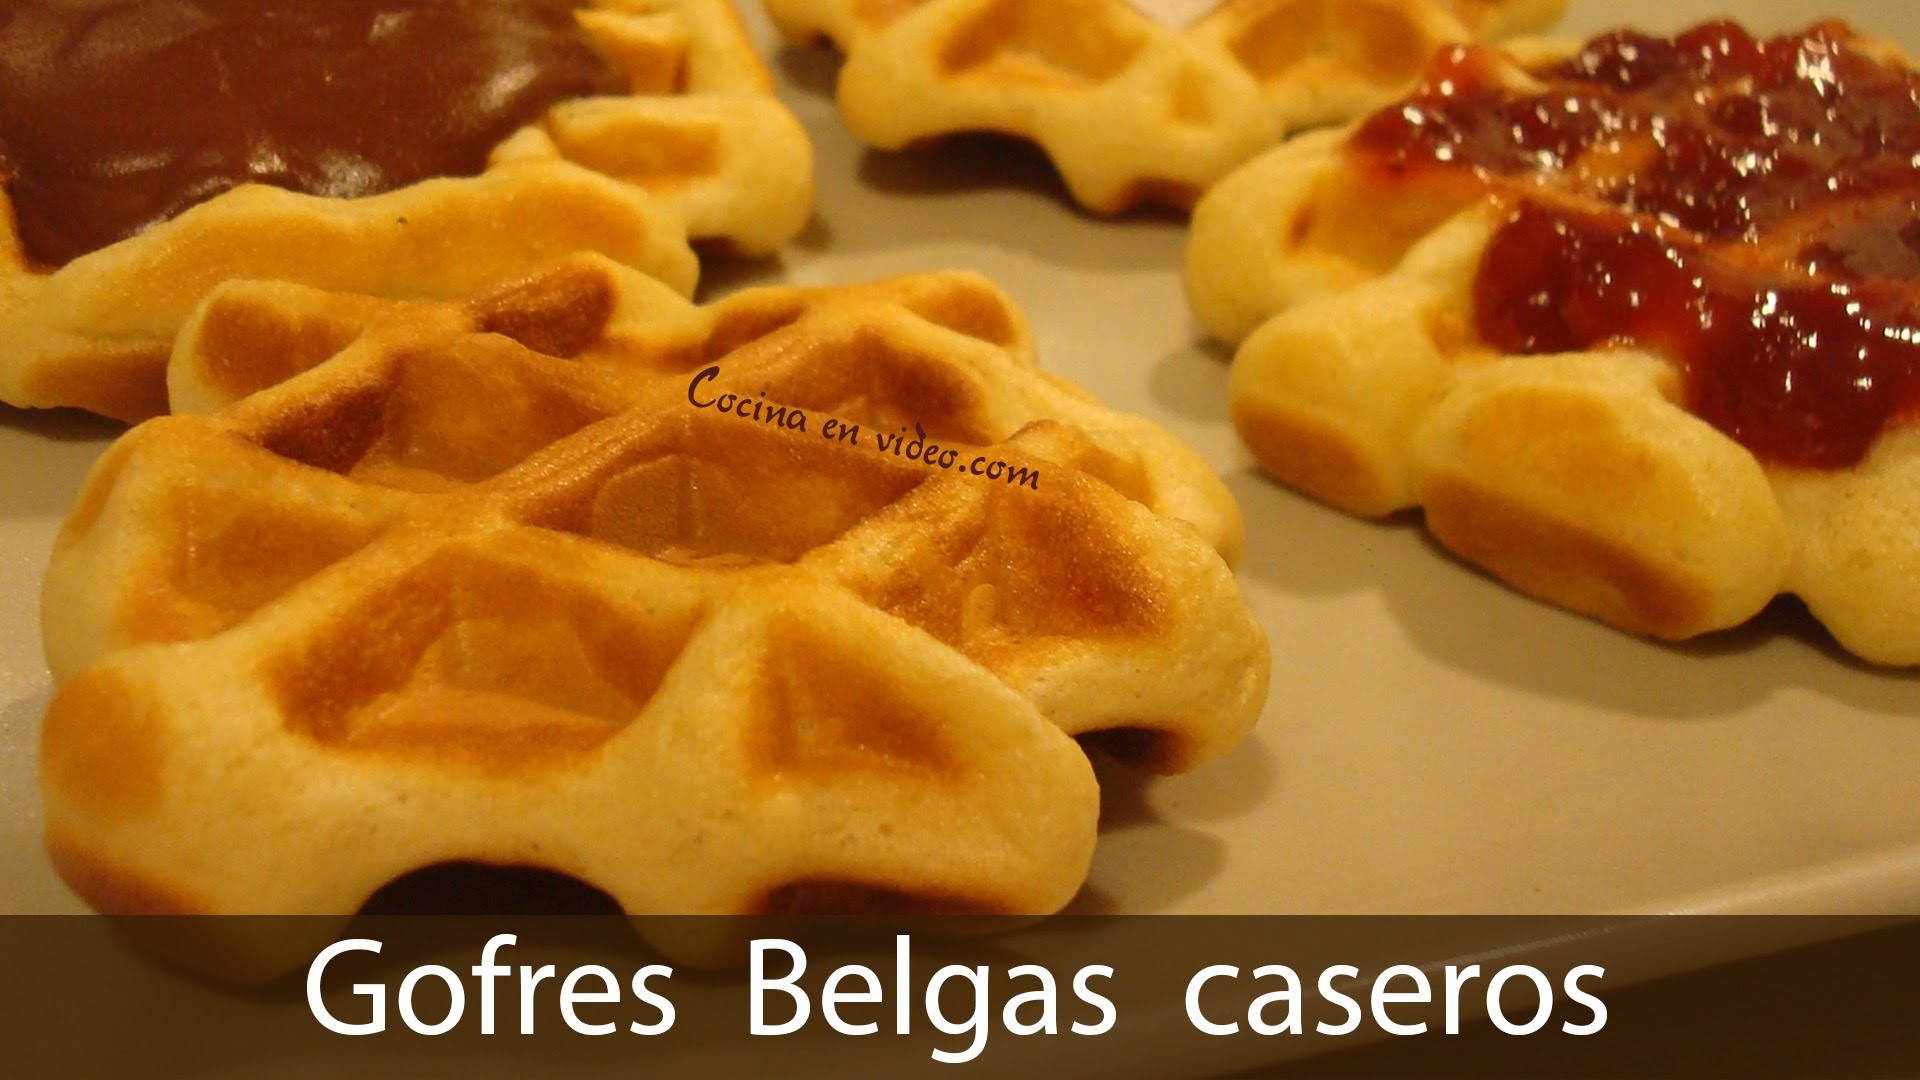 Gofres belgas caseros - Belgian Waffles, #175 - Cocina en video.com